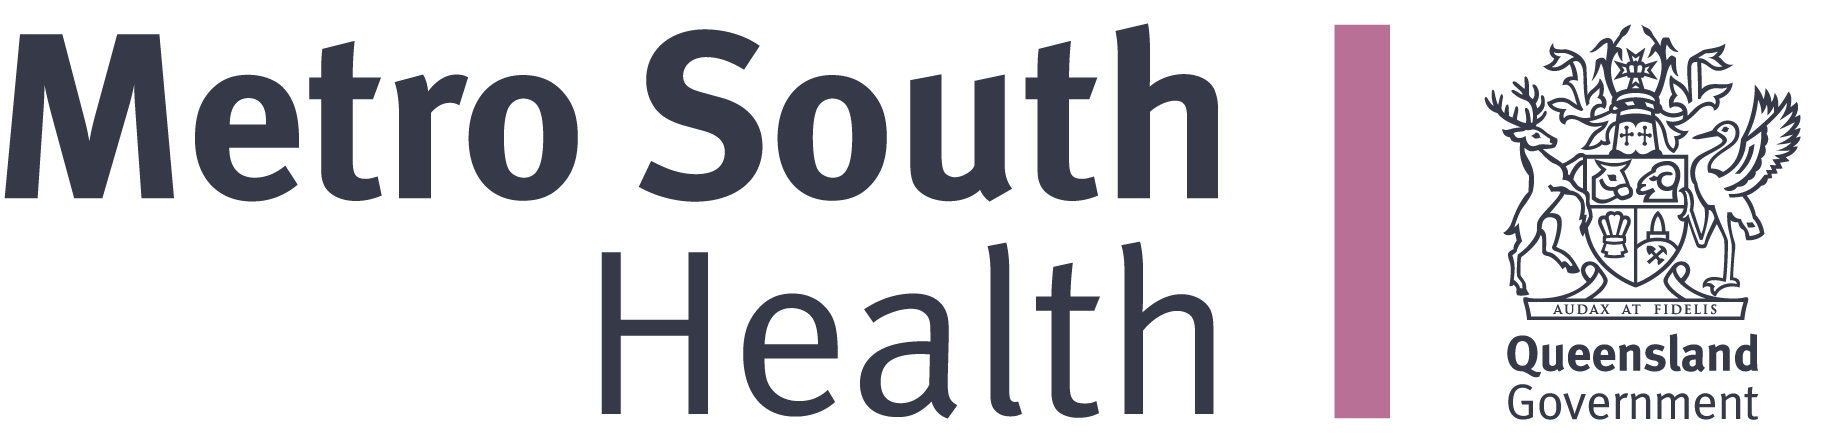 Metro South Health logo